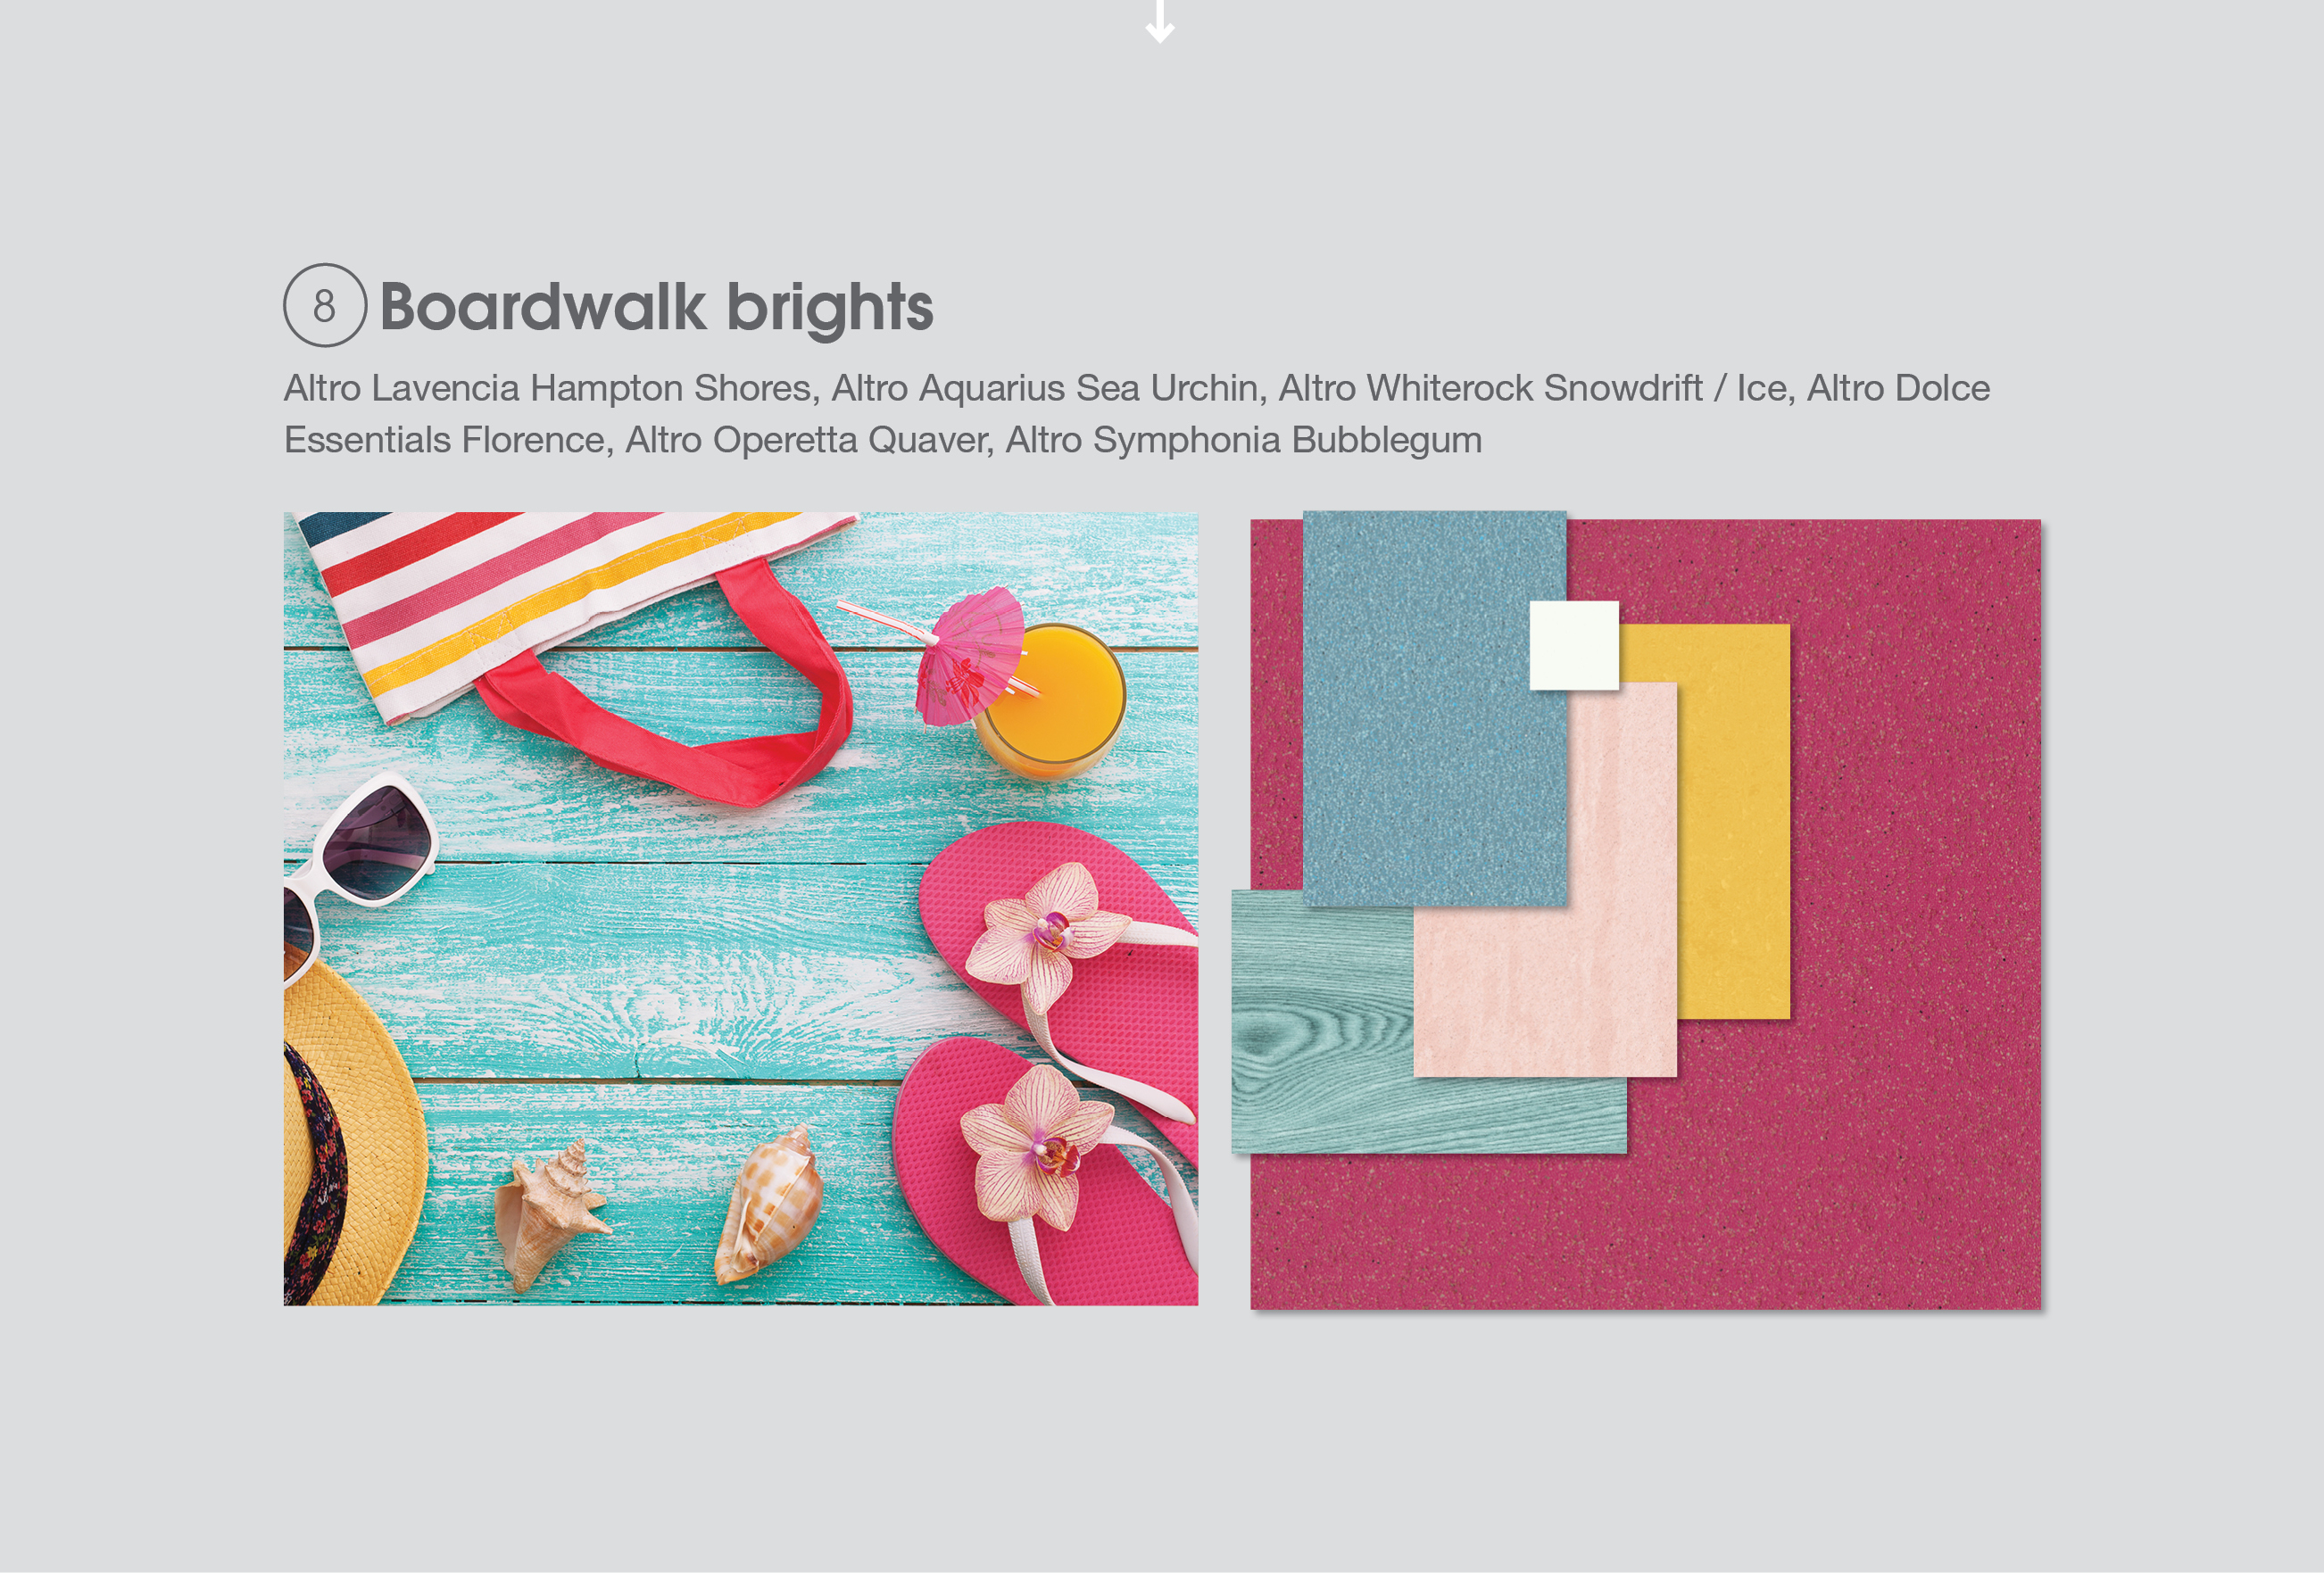 Boardwalk brights